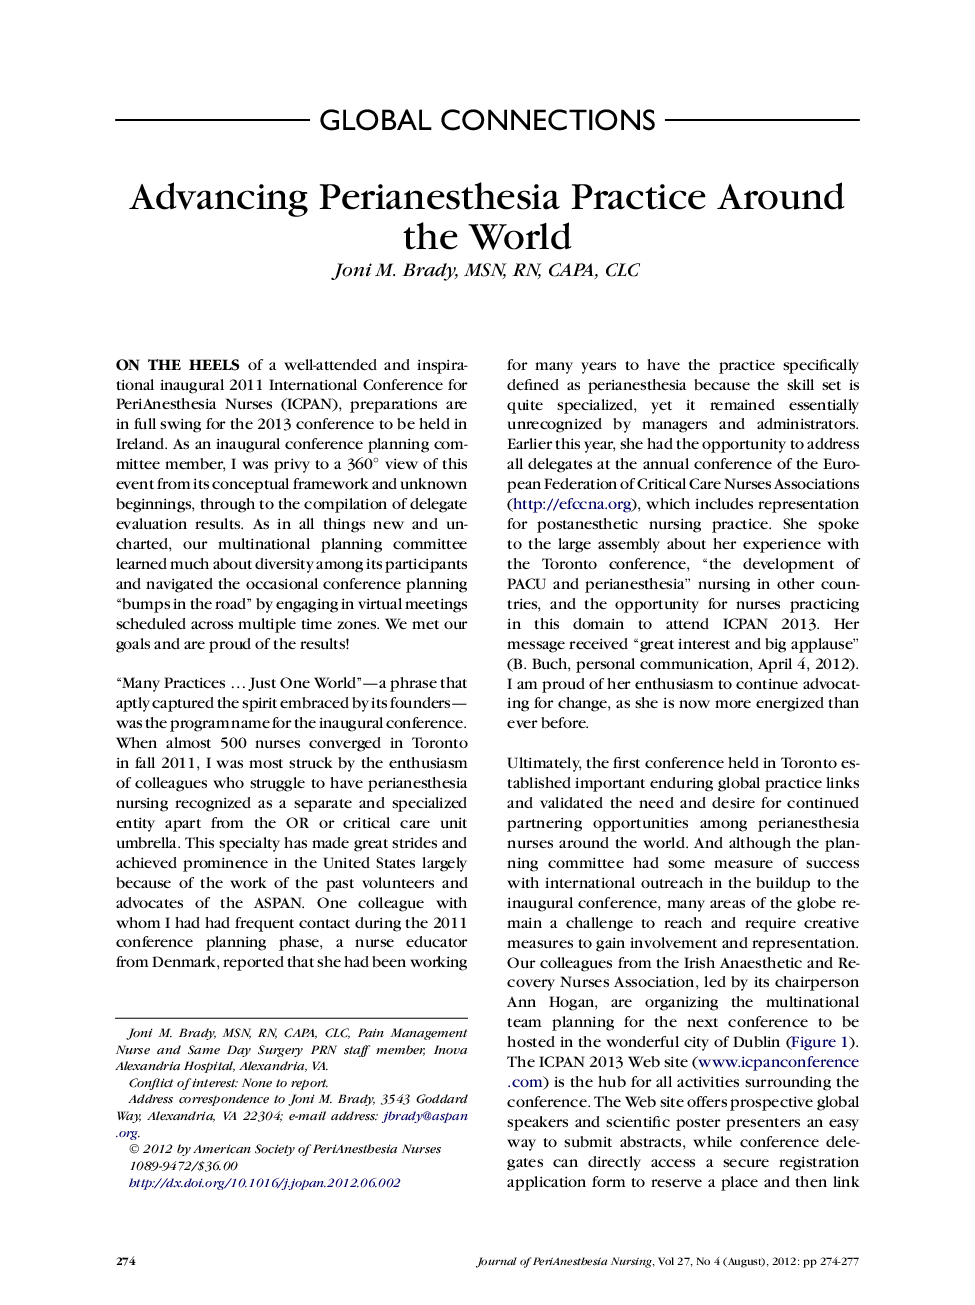 Advancing Perianesthesia Practice Around the World